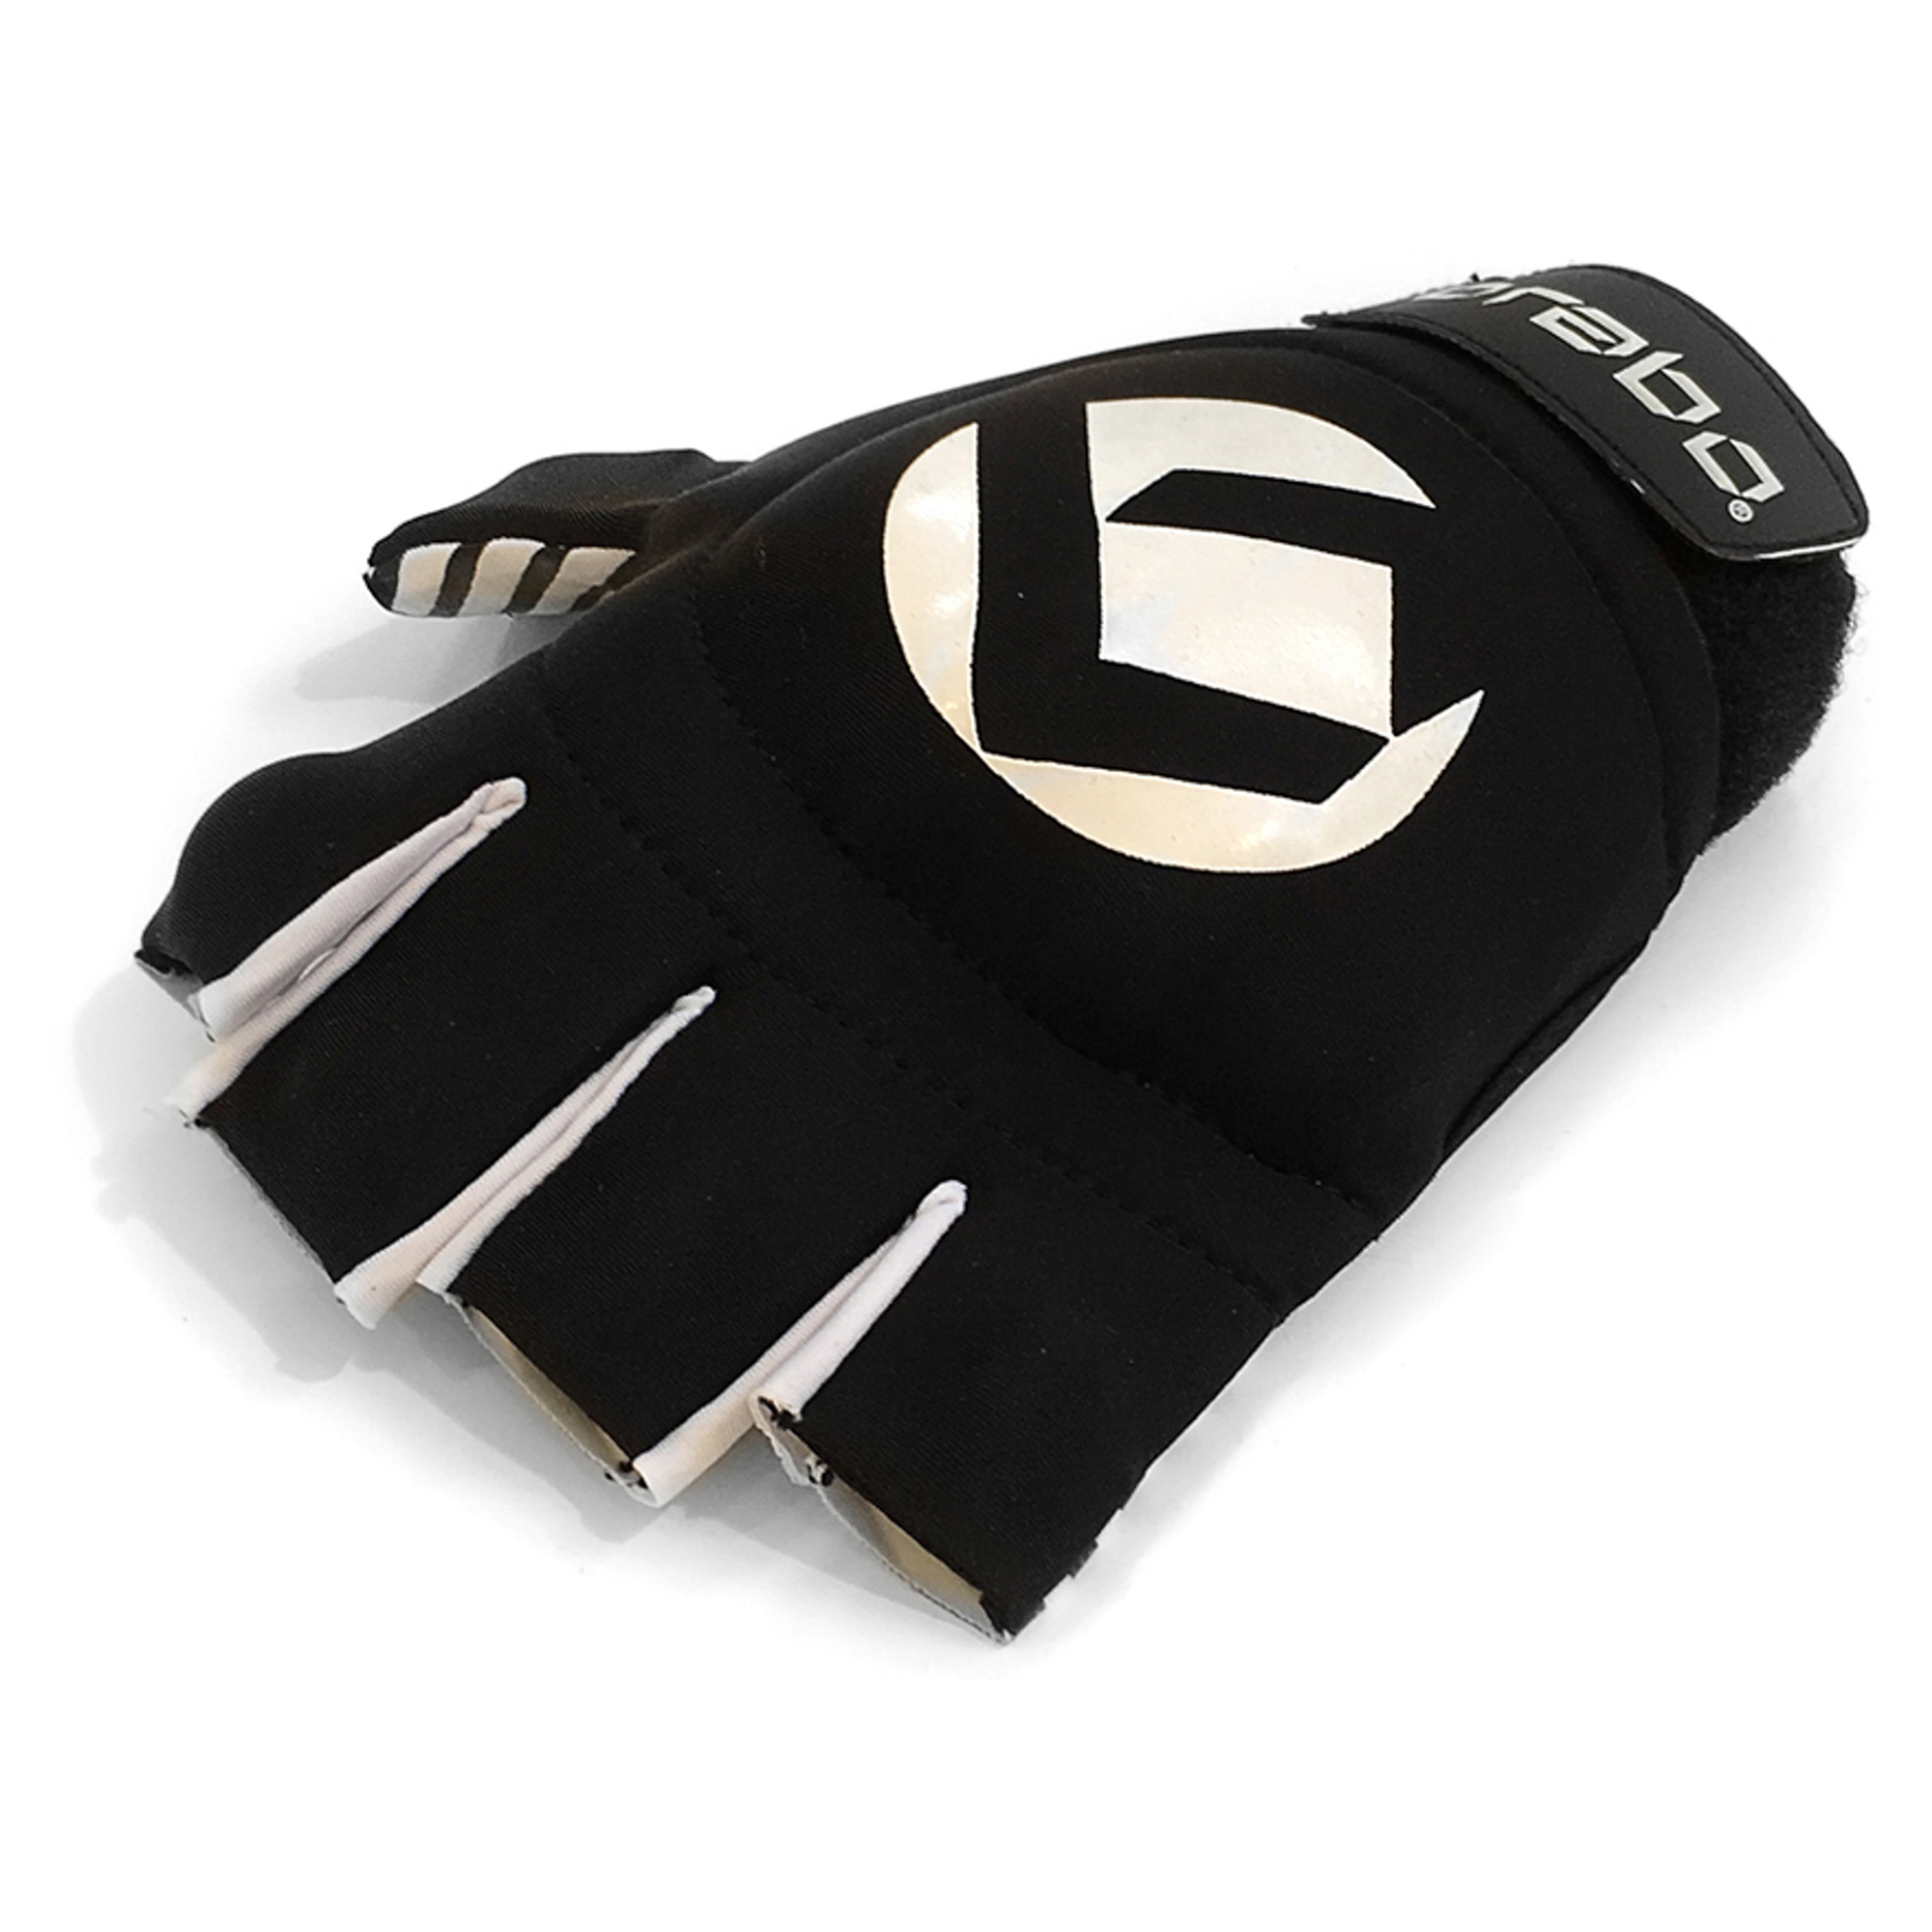 Glove Pro F5